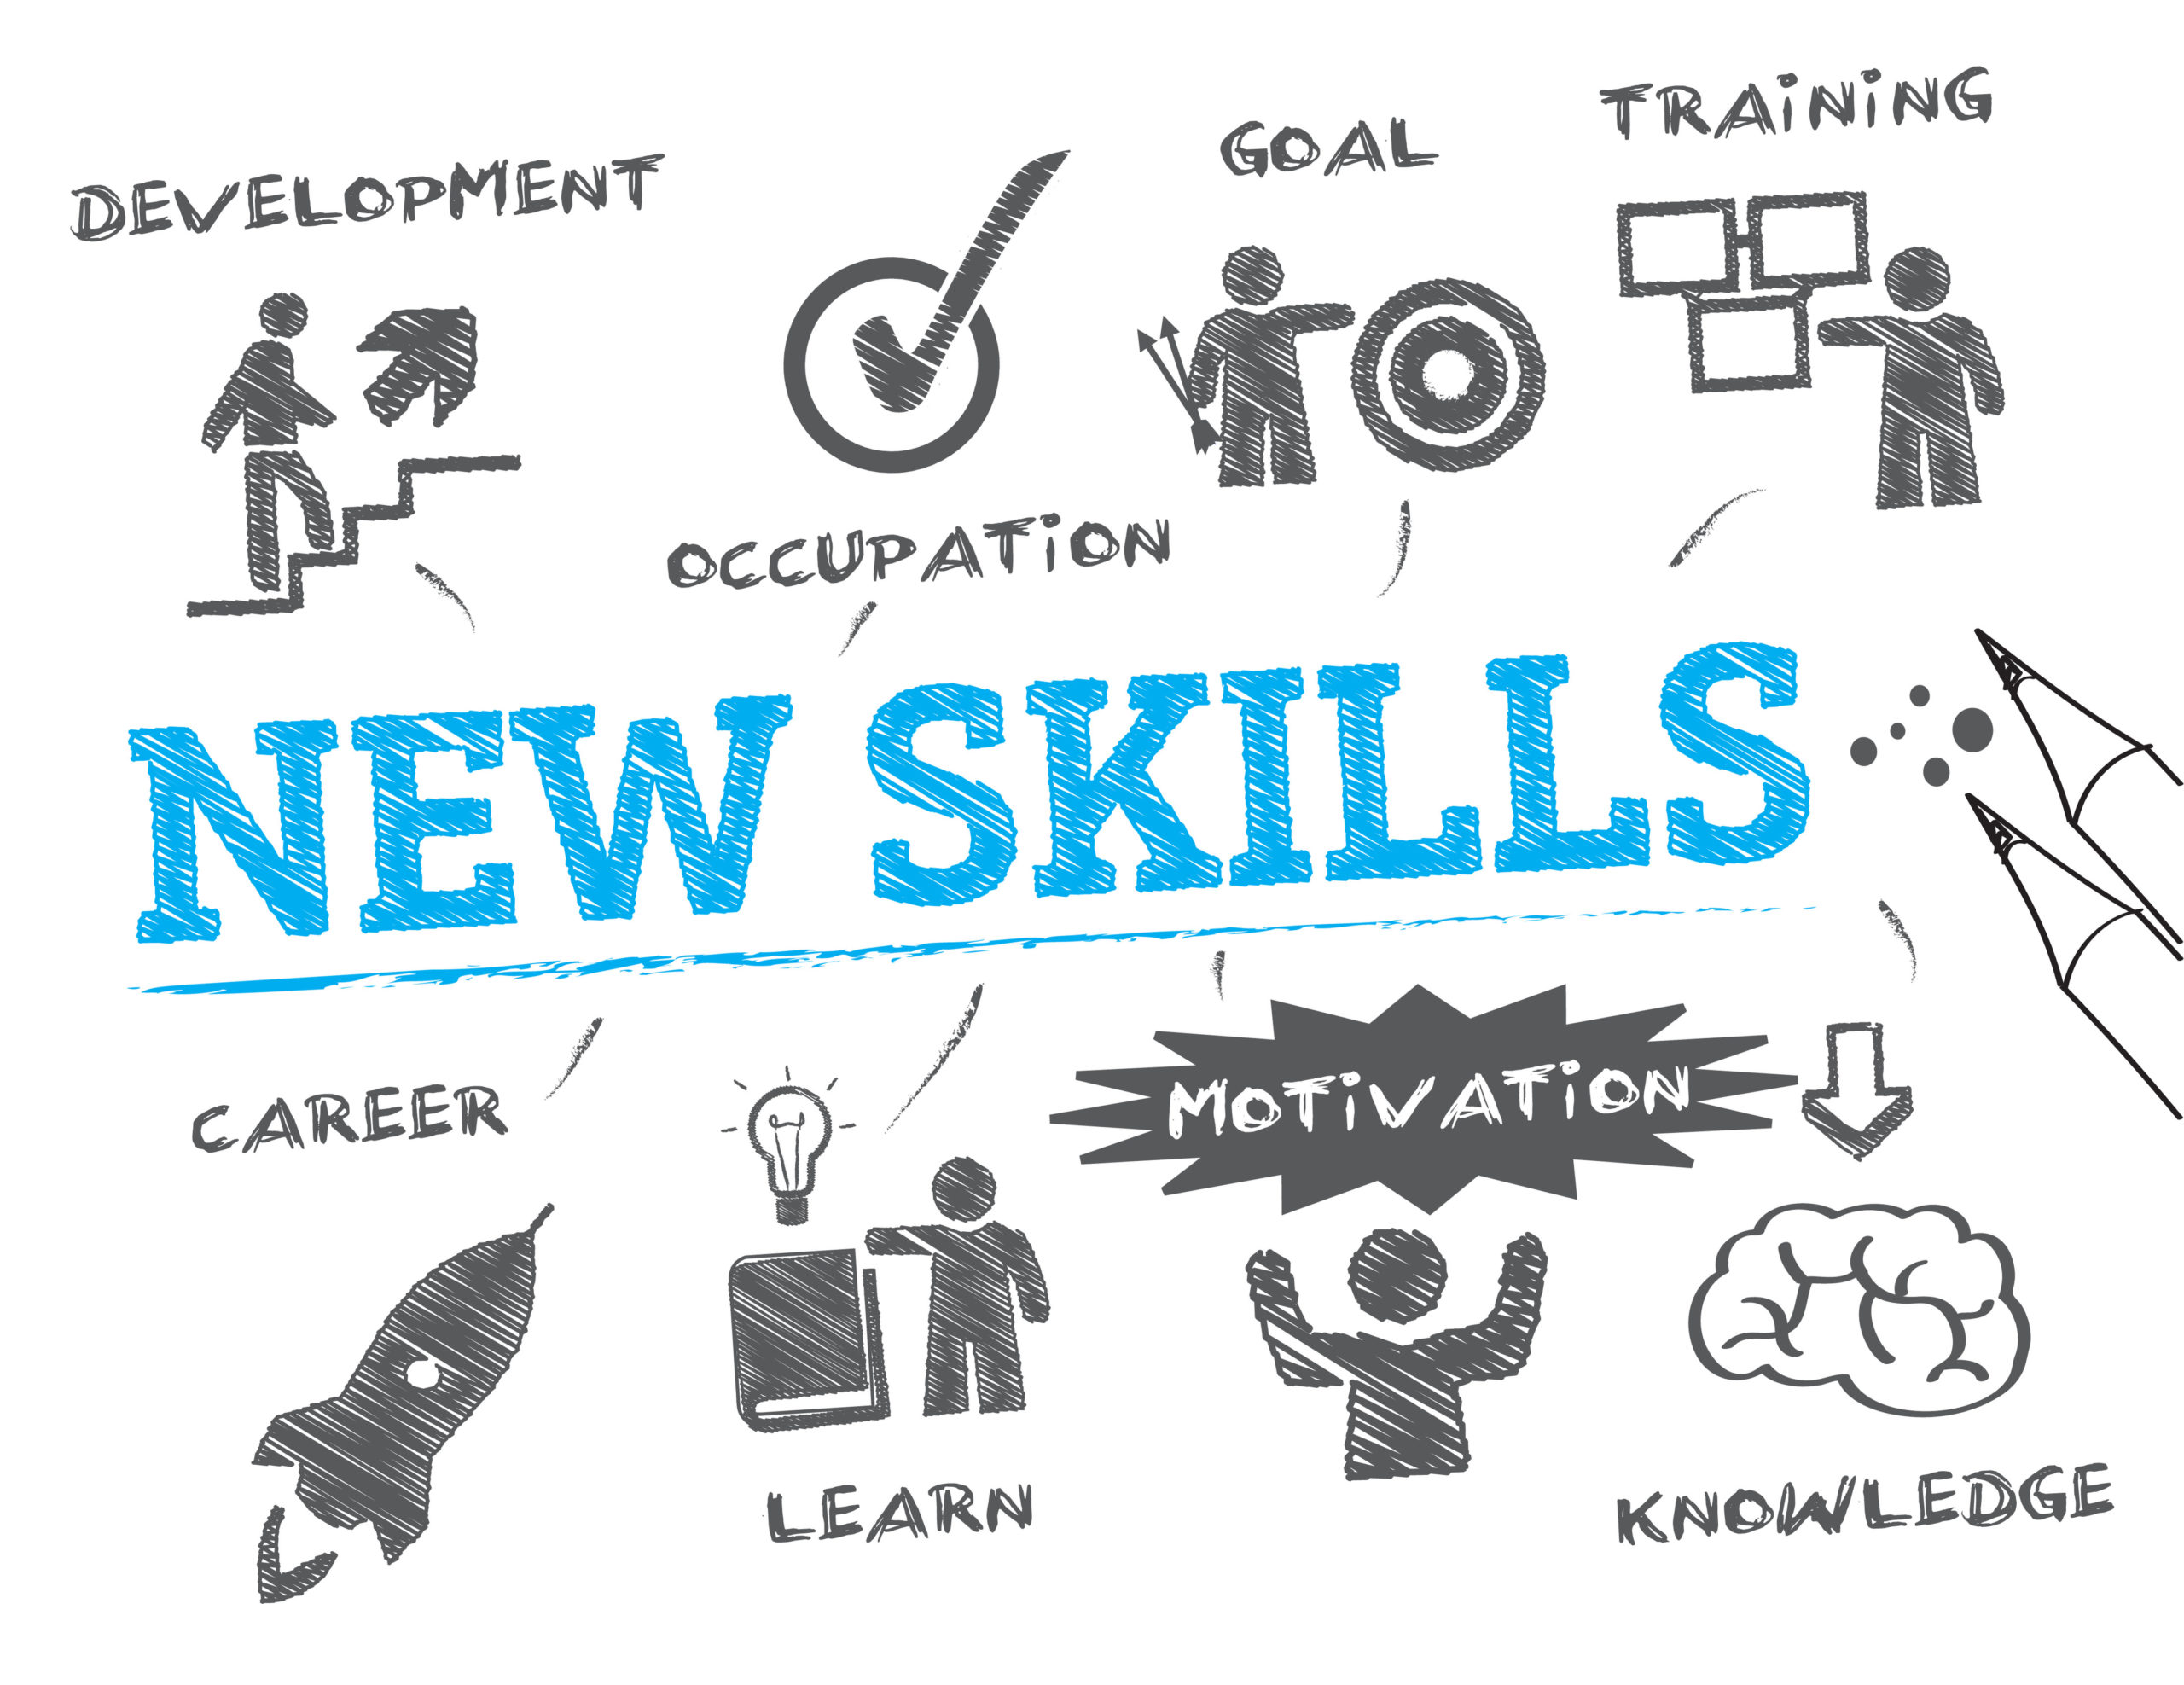 Getting new skills. New skill. Learning New skills. People learn New skills. New skill learned.